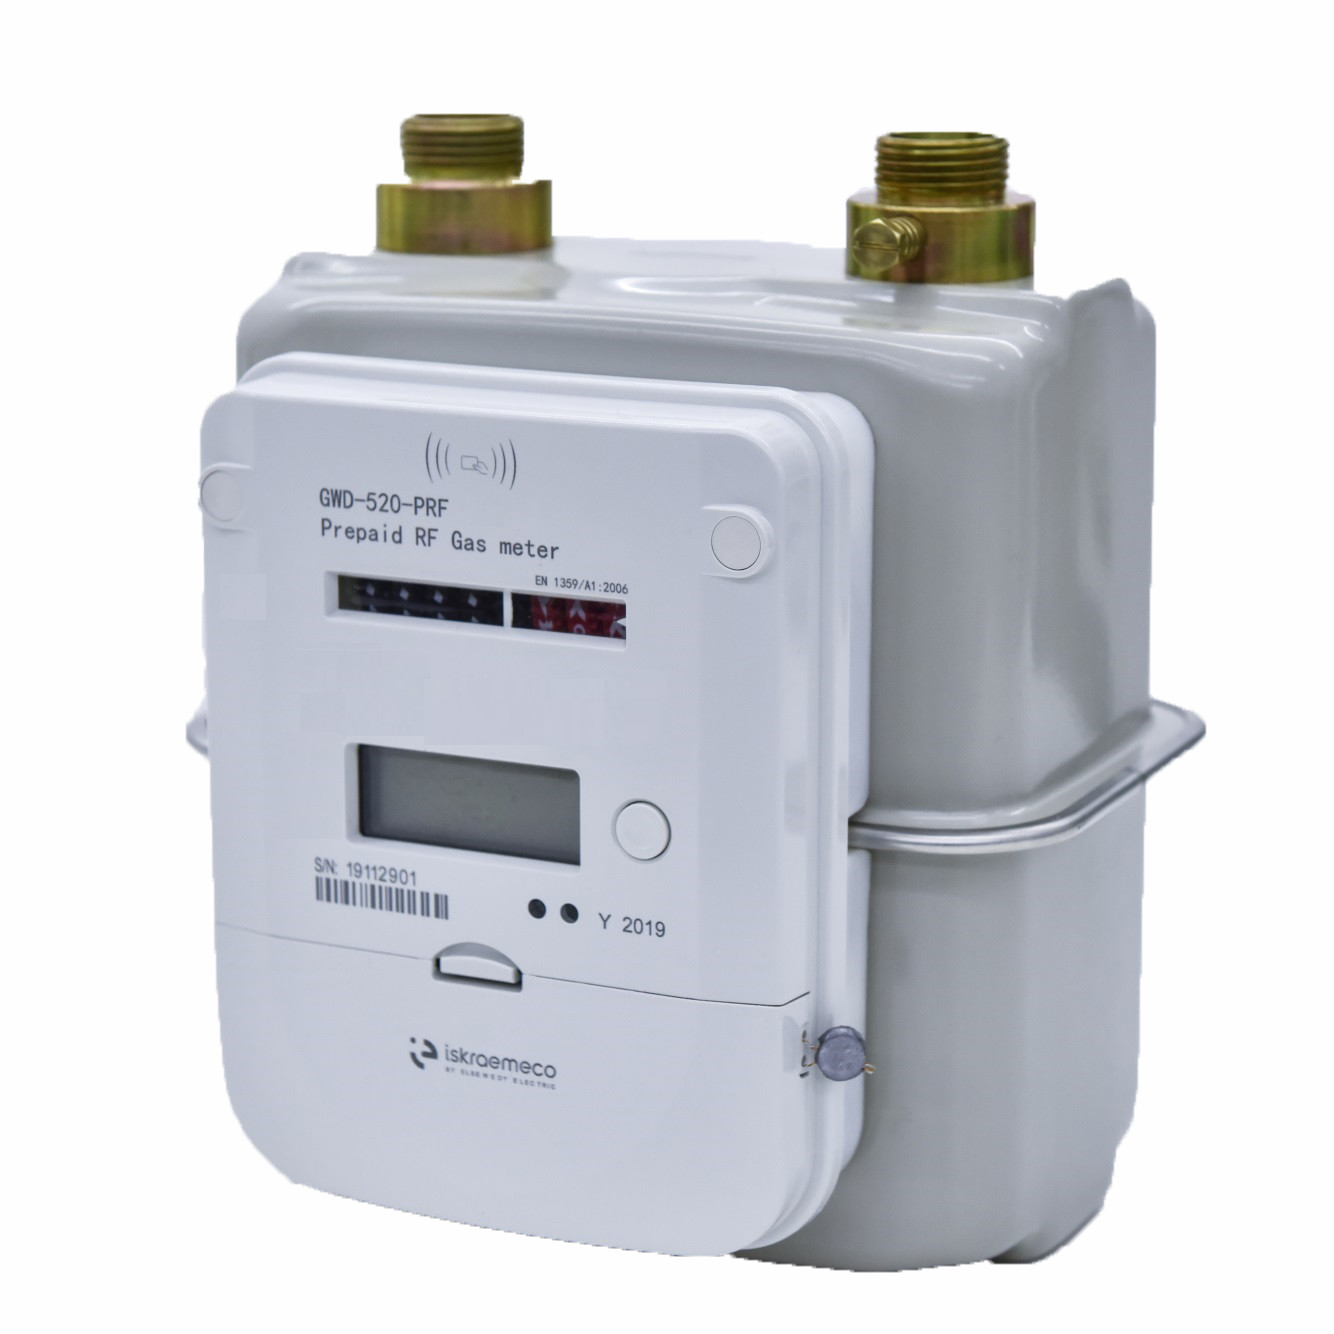 prepaid-rf-card-smart-gas-meter-lcd-display-ip65-protection-zg-d-4-0